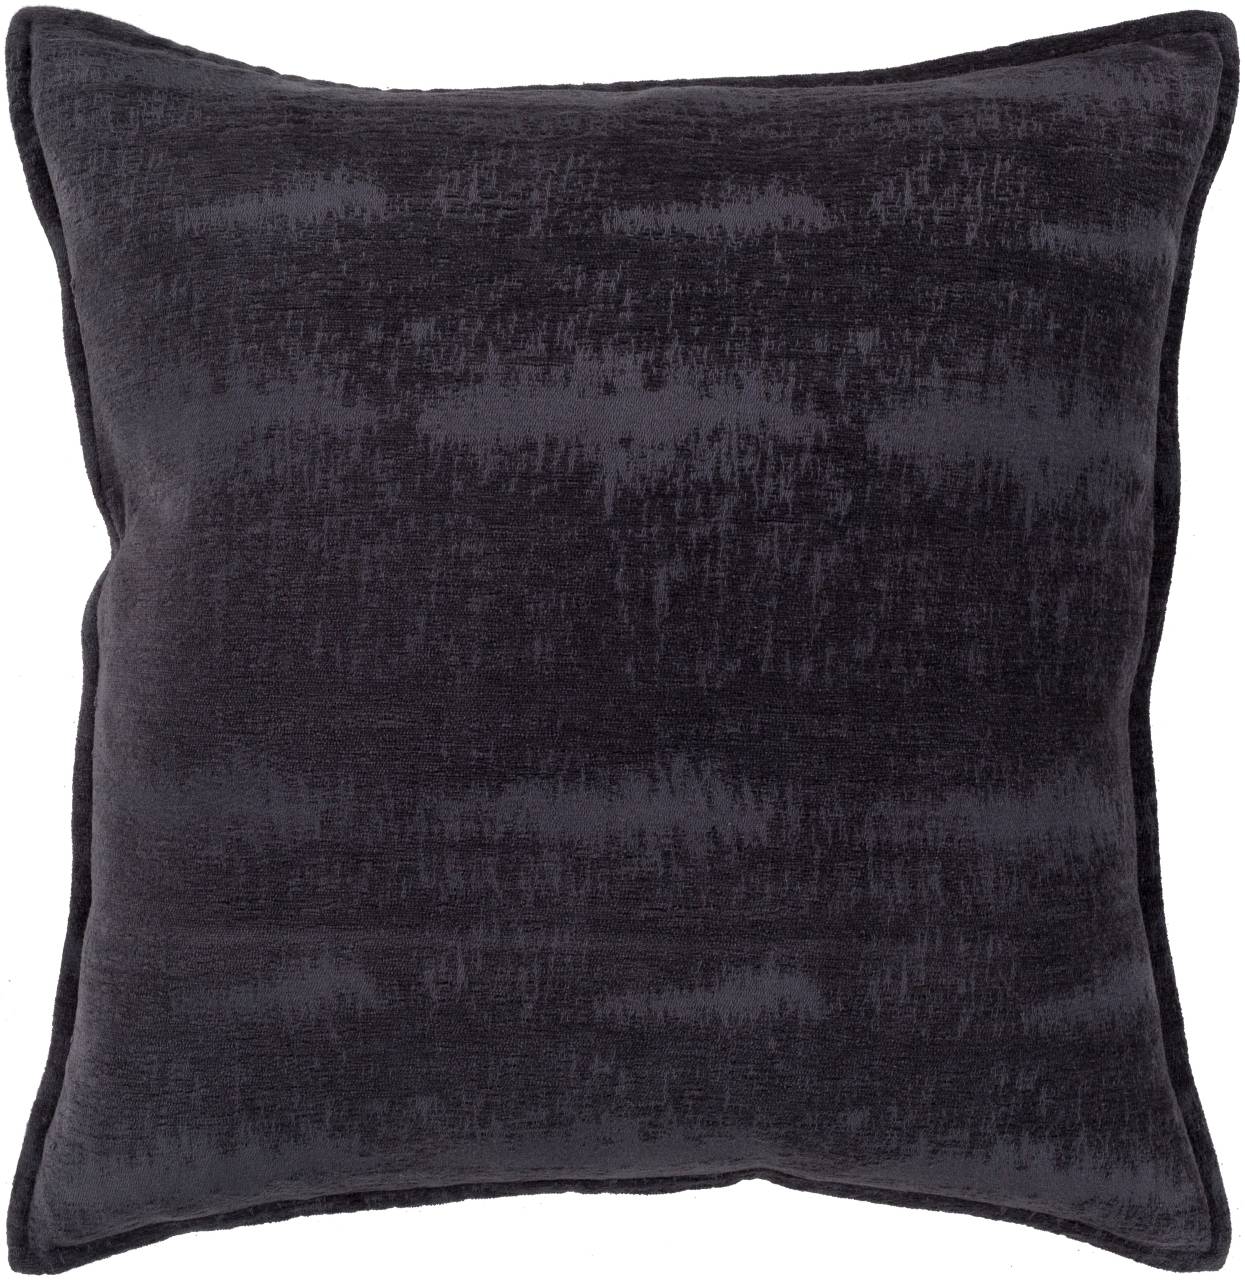 Linter Navy Pillow Cover